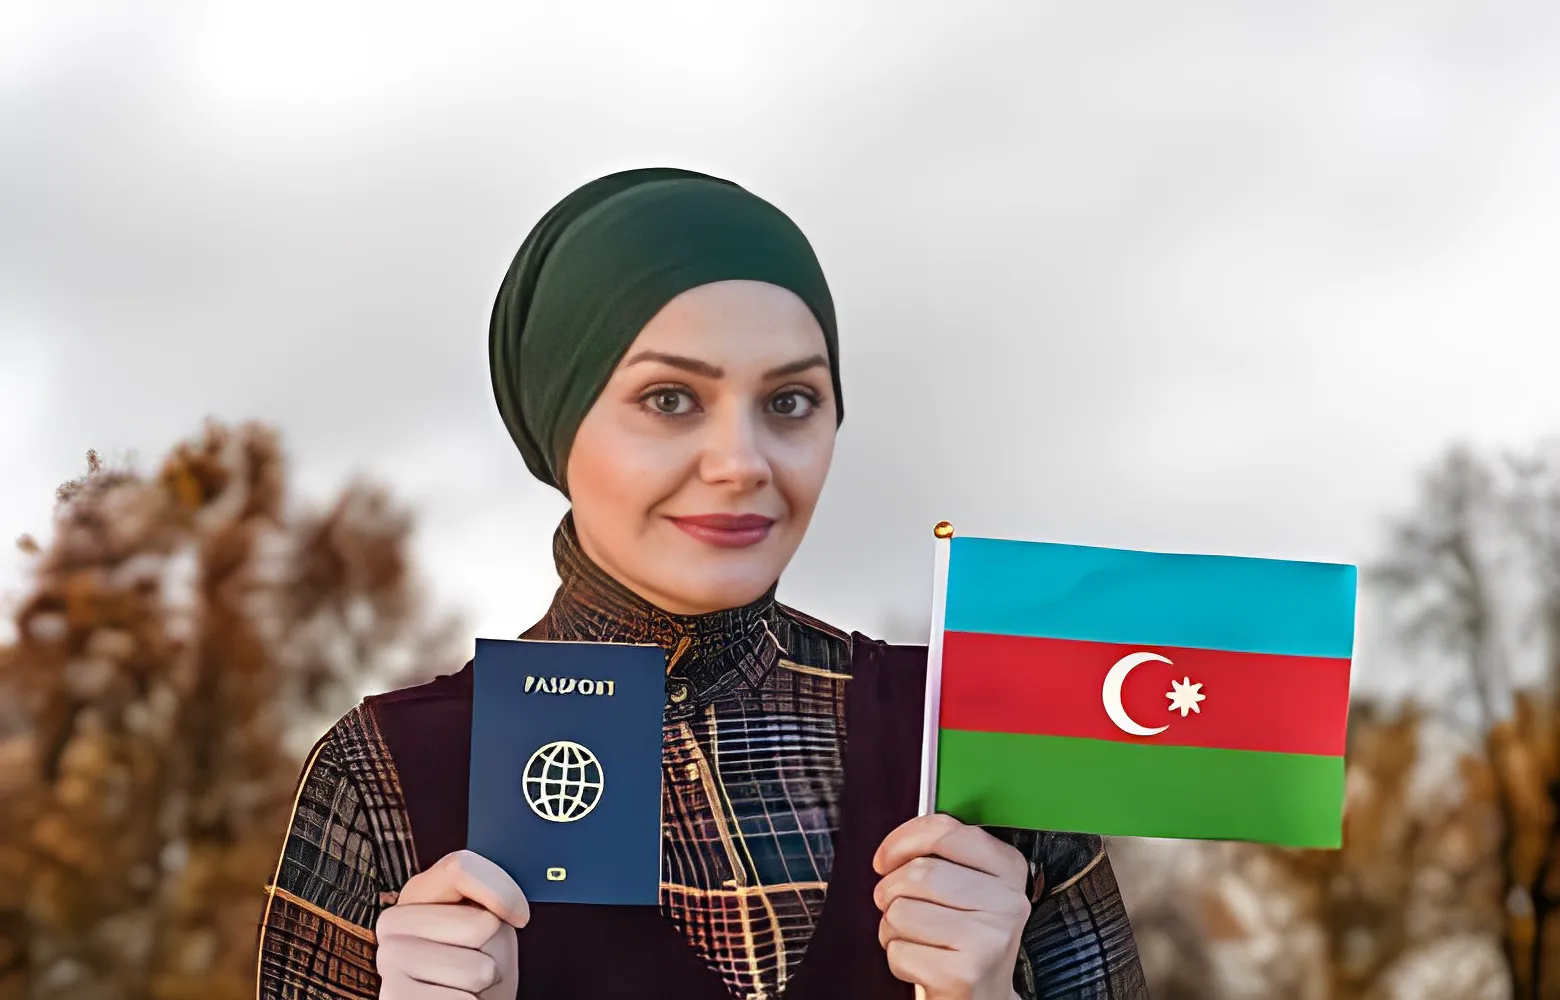 Azerbaijan eVisa